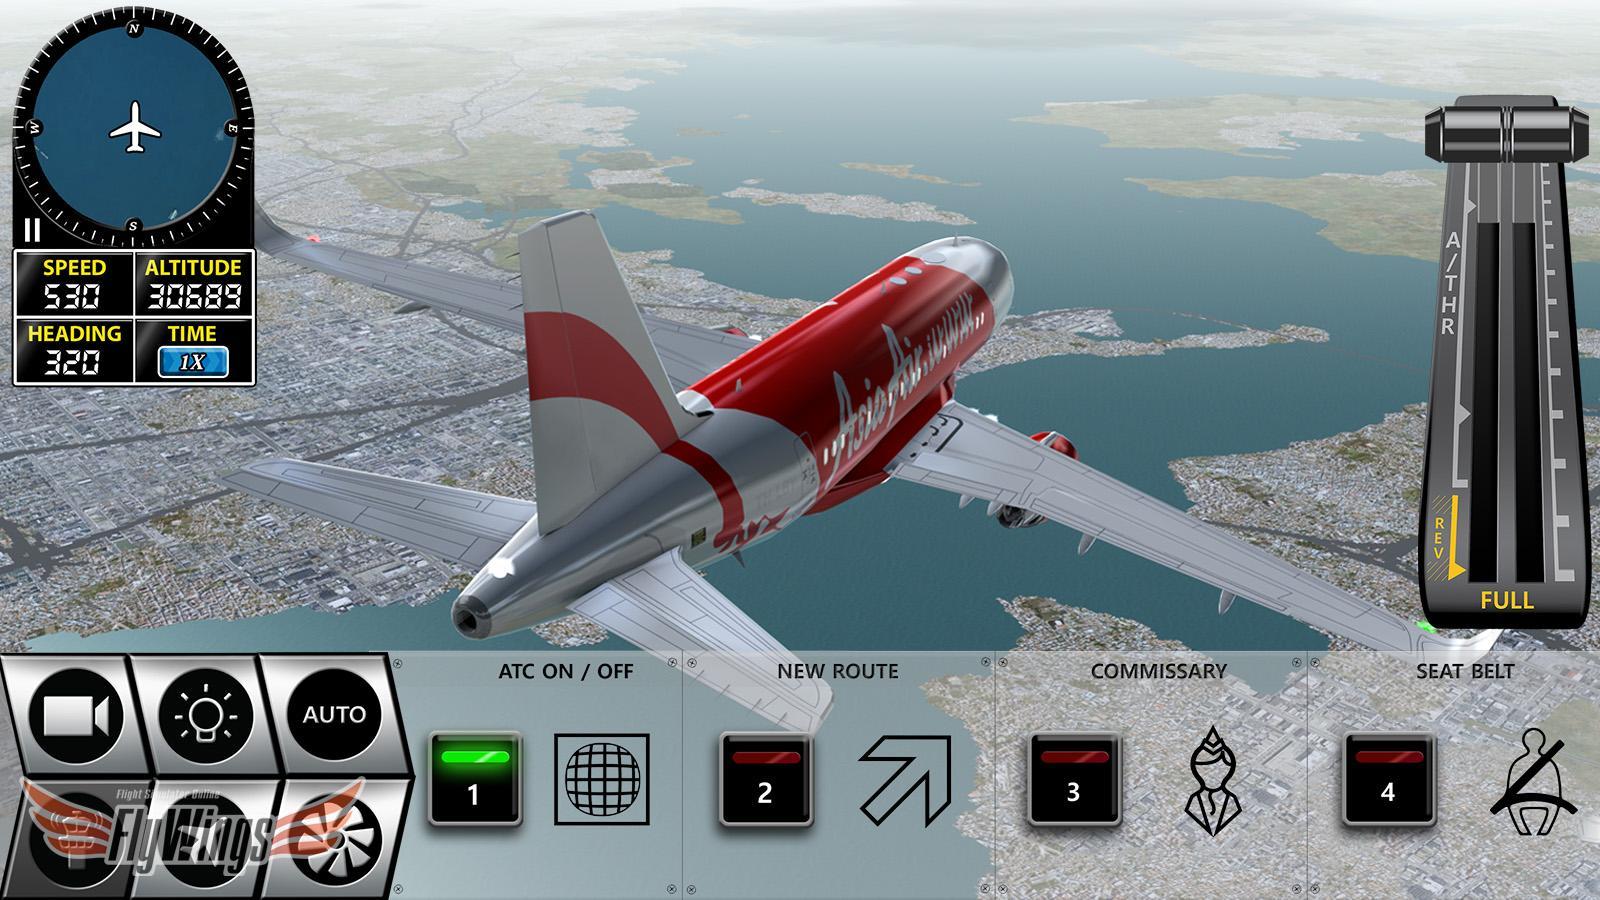 Flight Simulator 2016 Flywings For Android Apk Download - airplane simulator 2016 roblox